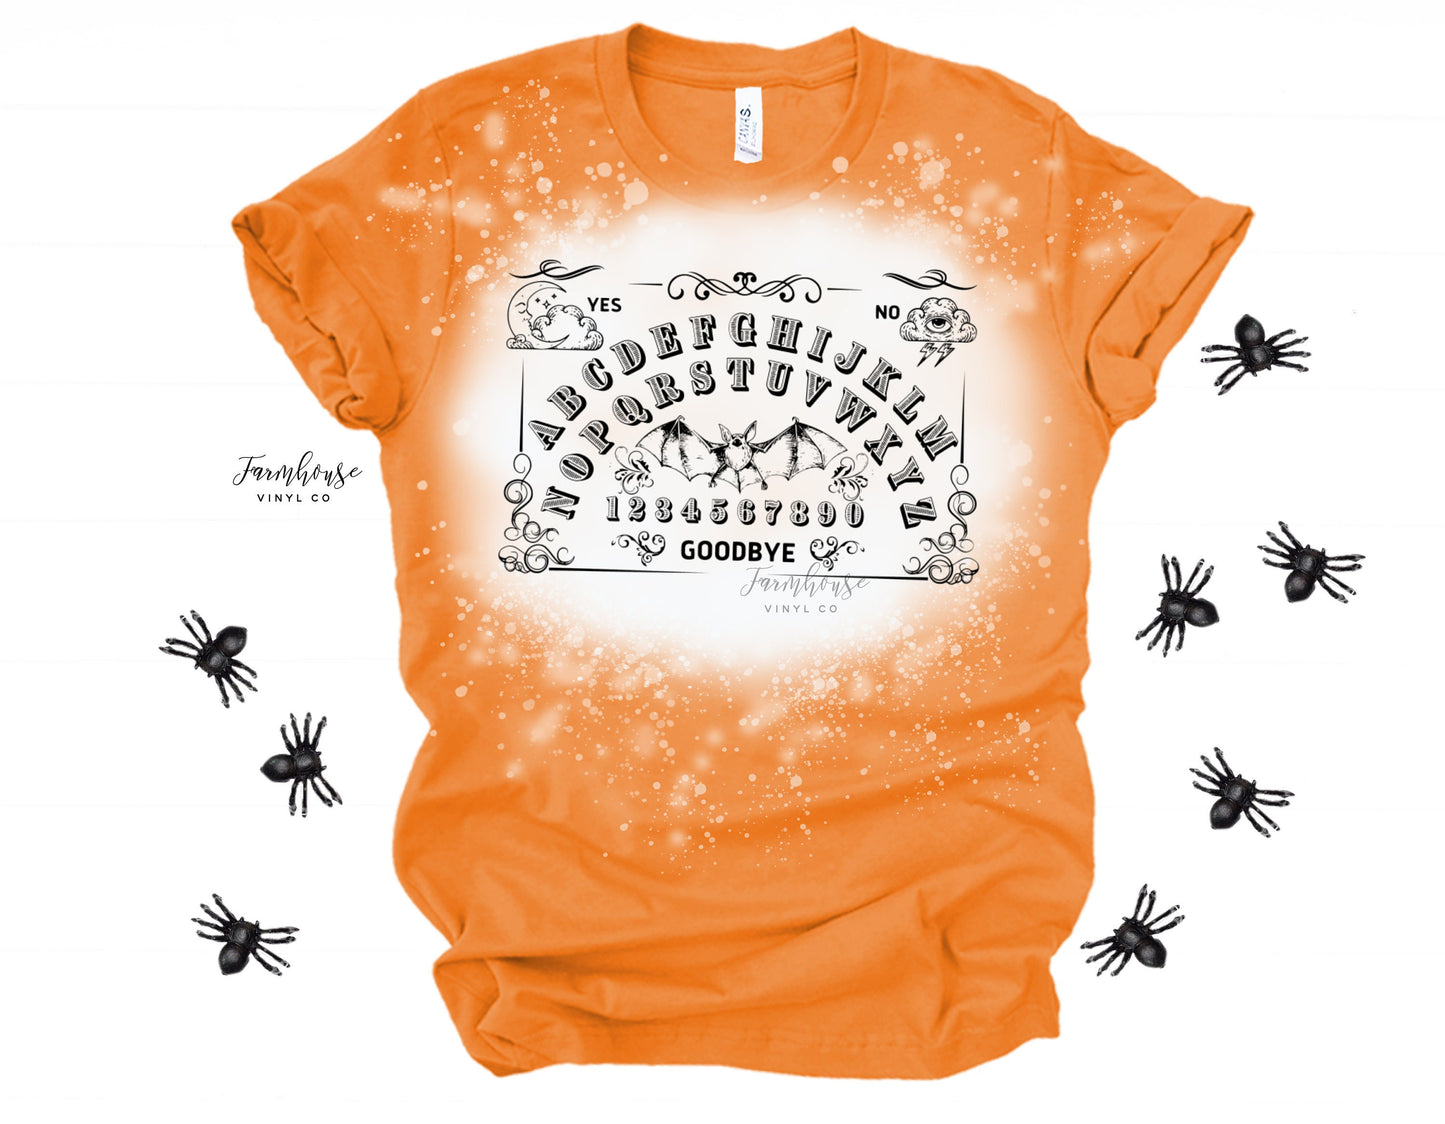 Ouija Board Halloween T-Shirt / Creepy Game Shirt / Halloween Shirt Group / Scary Shirt / Witch Shirt - Farmhouse Vinyl Co